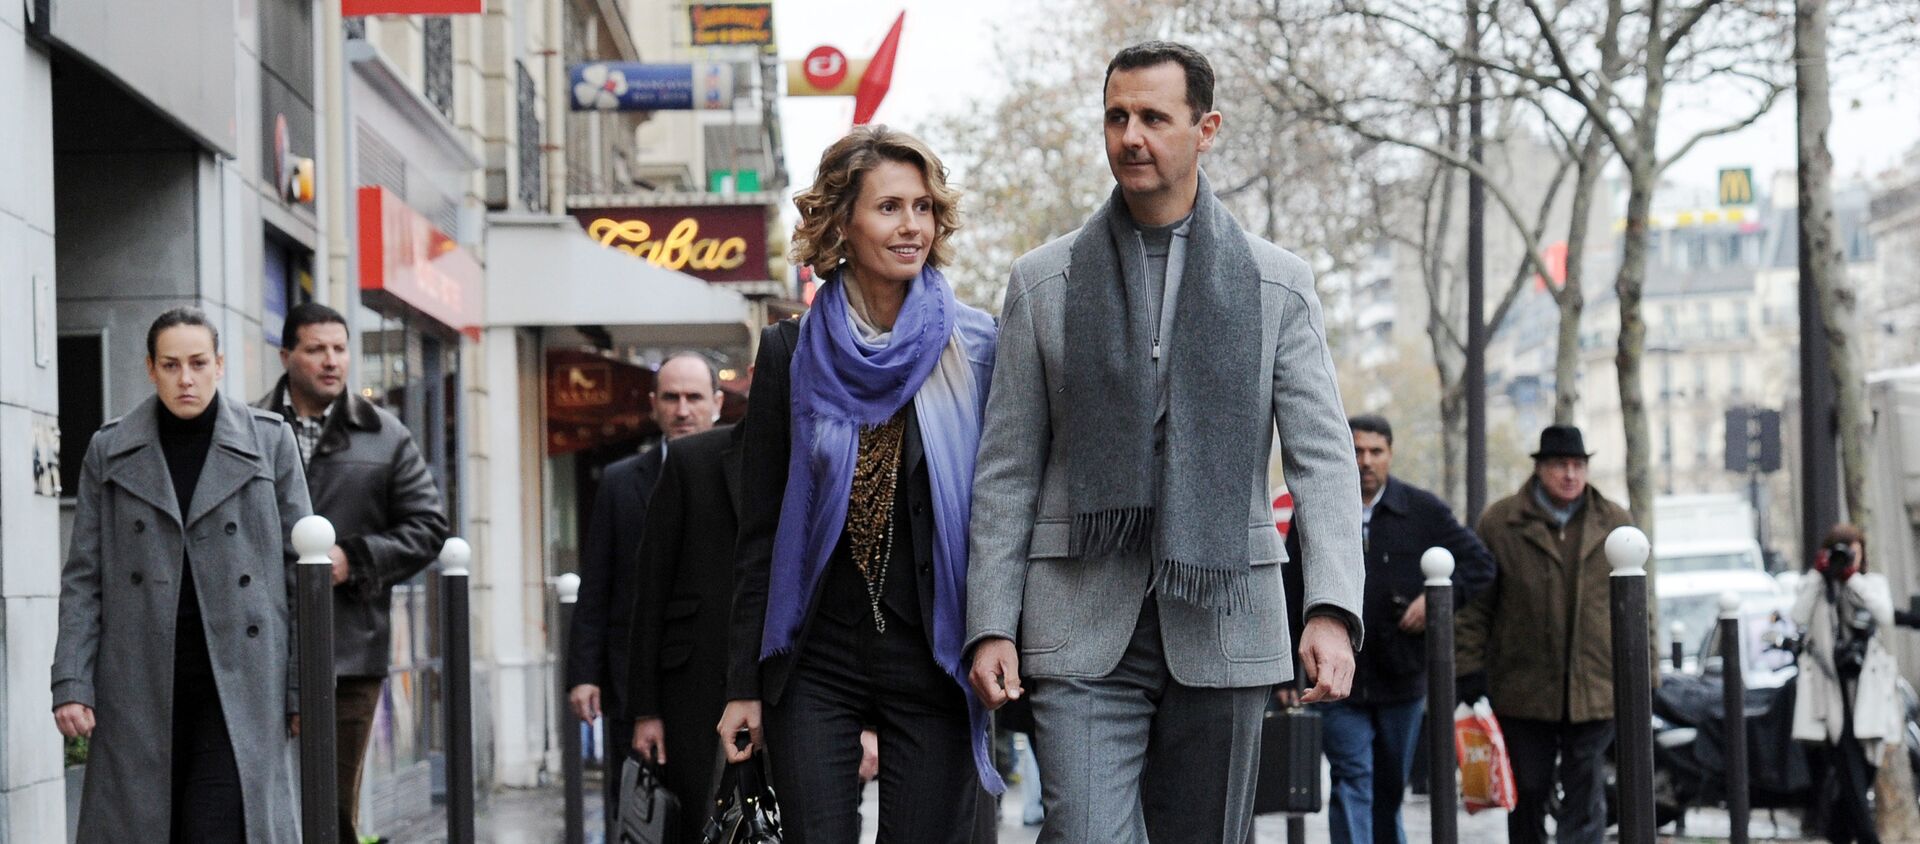 Syrian president Bashar al-Assad and his wife Asma walk in a Parisian street on 10 December 2010. - Sputnik International, 1920, 12.03.2021